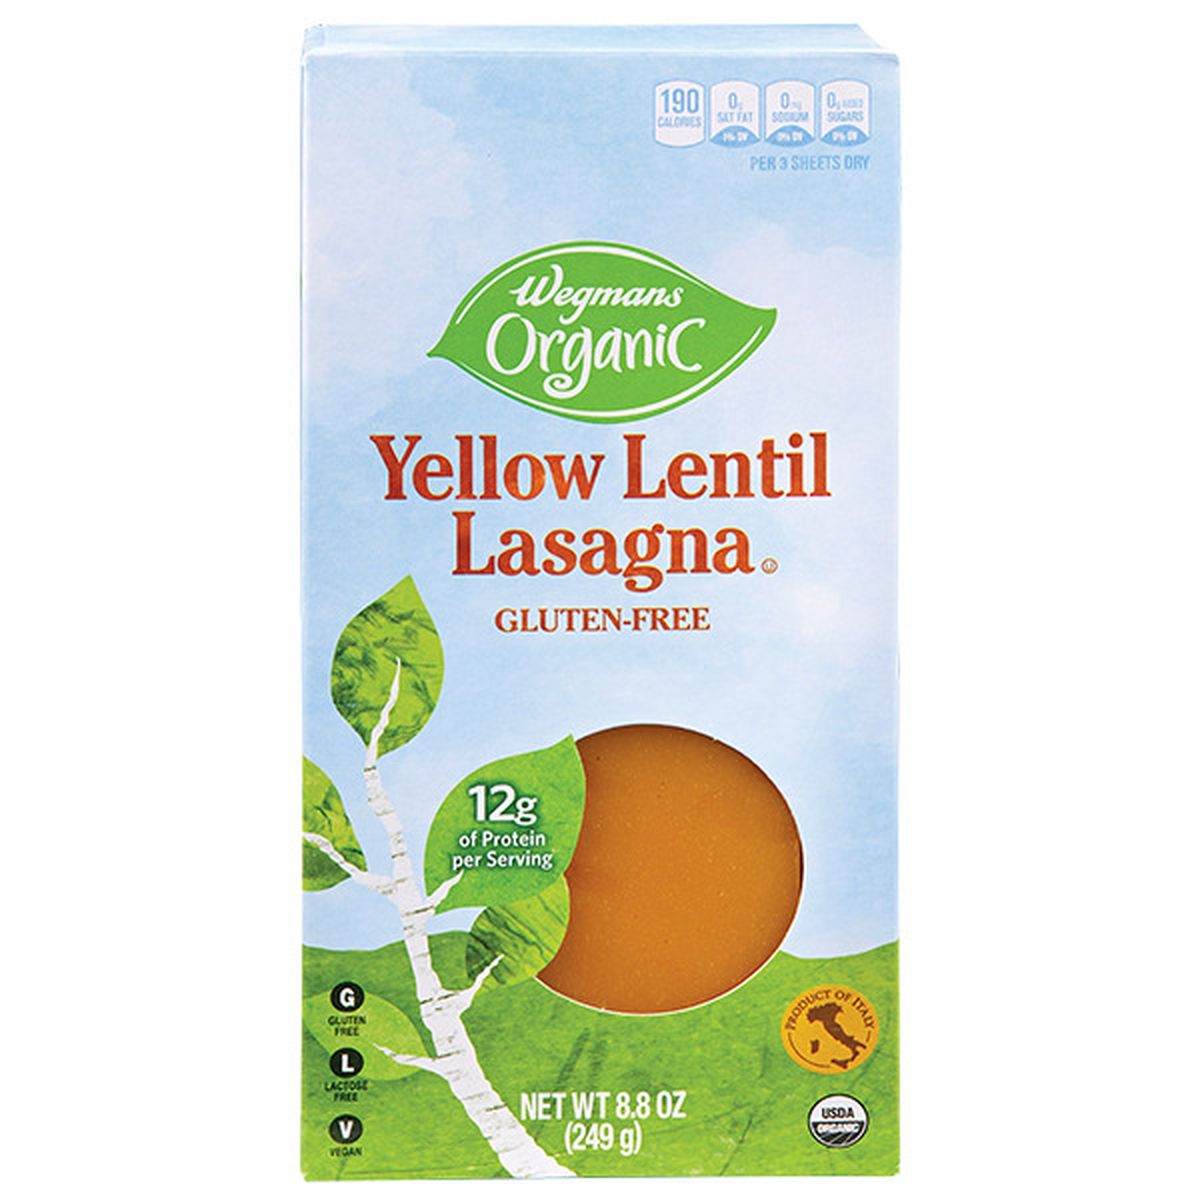 Calories in Wegmans Organic Yellow Lentil Lasagna